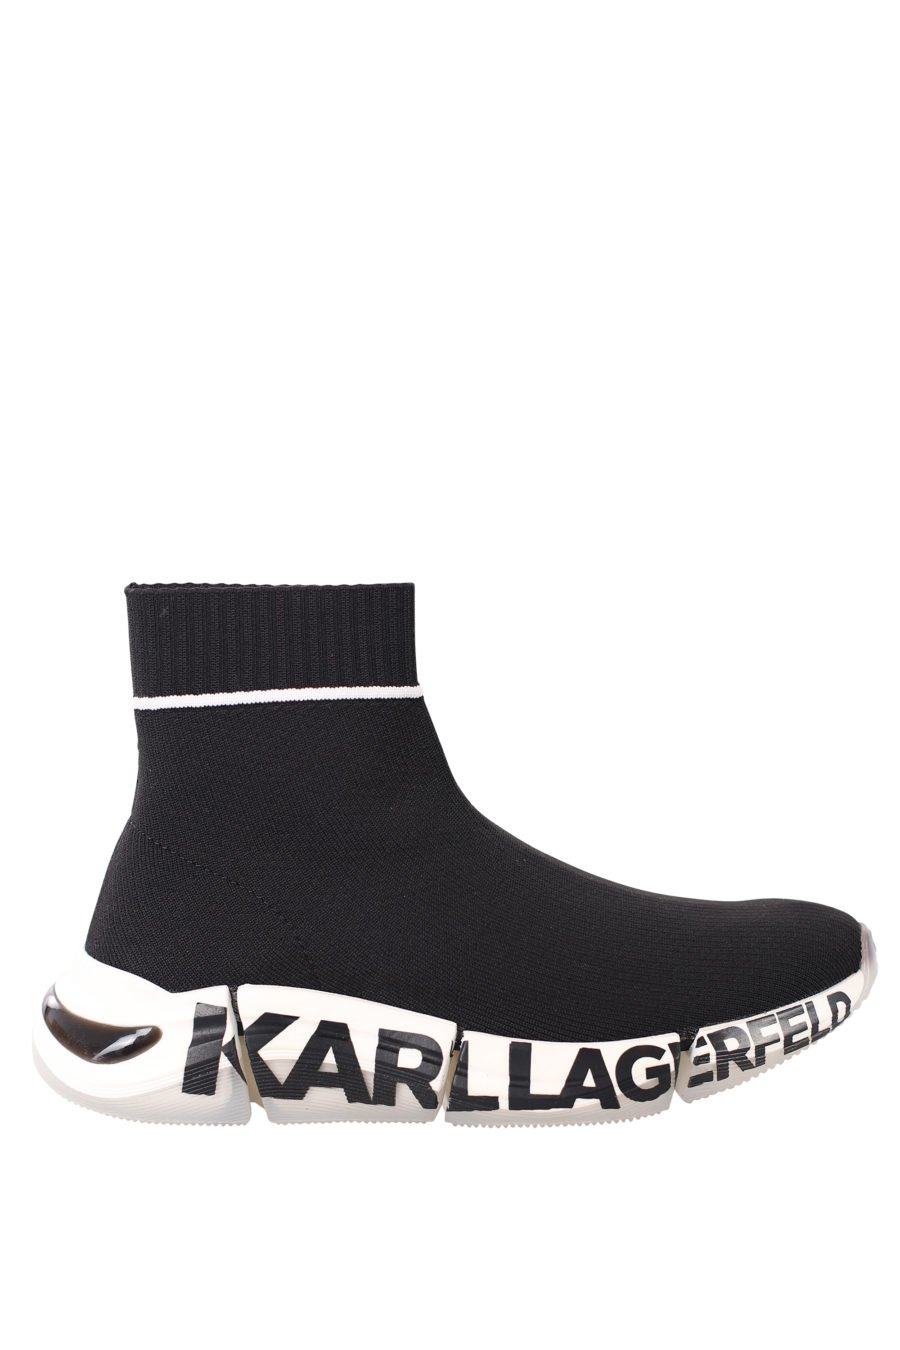 Black maxilogo ankle boots on sock sole - IMG 0408